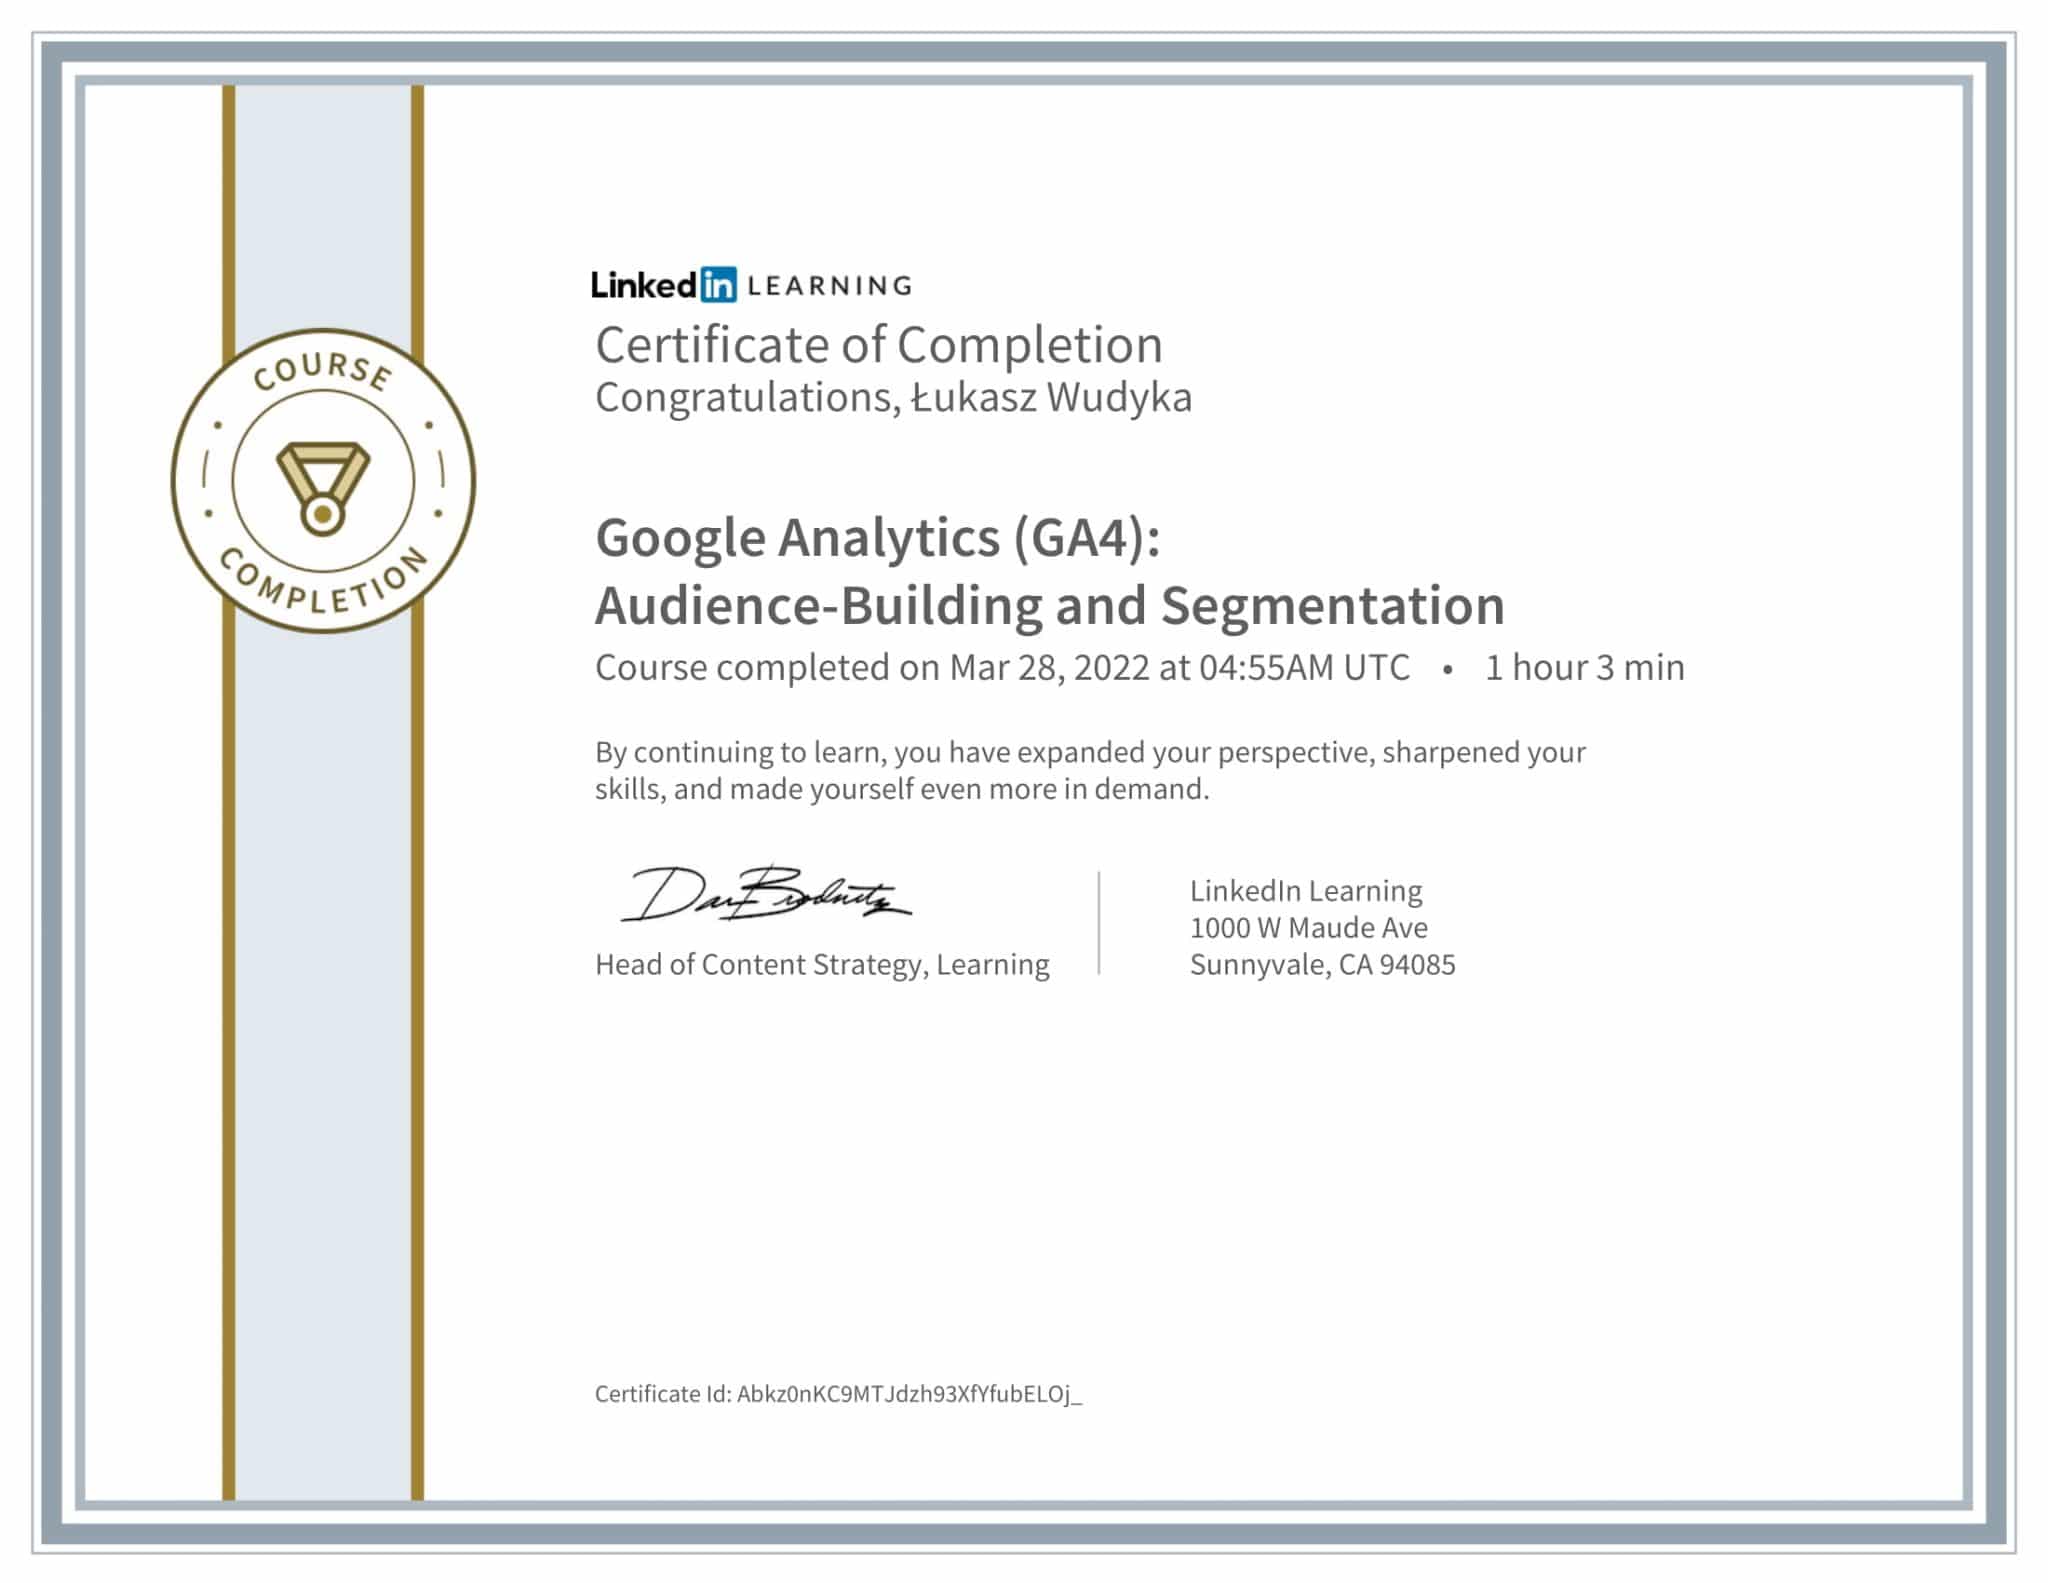 CertificateOfCompletion_Google Analytics GA4 AudienceBuilding and Segmentation-1